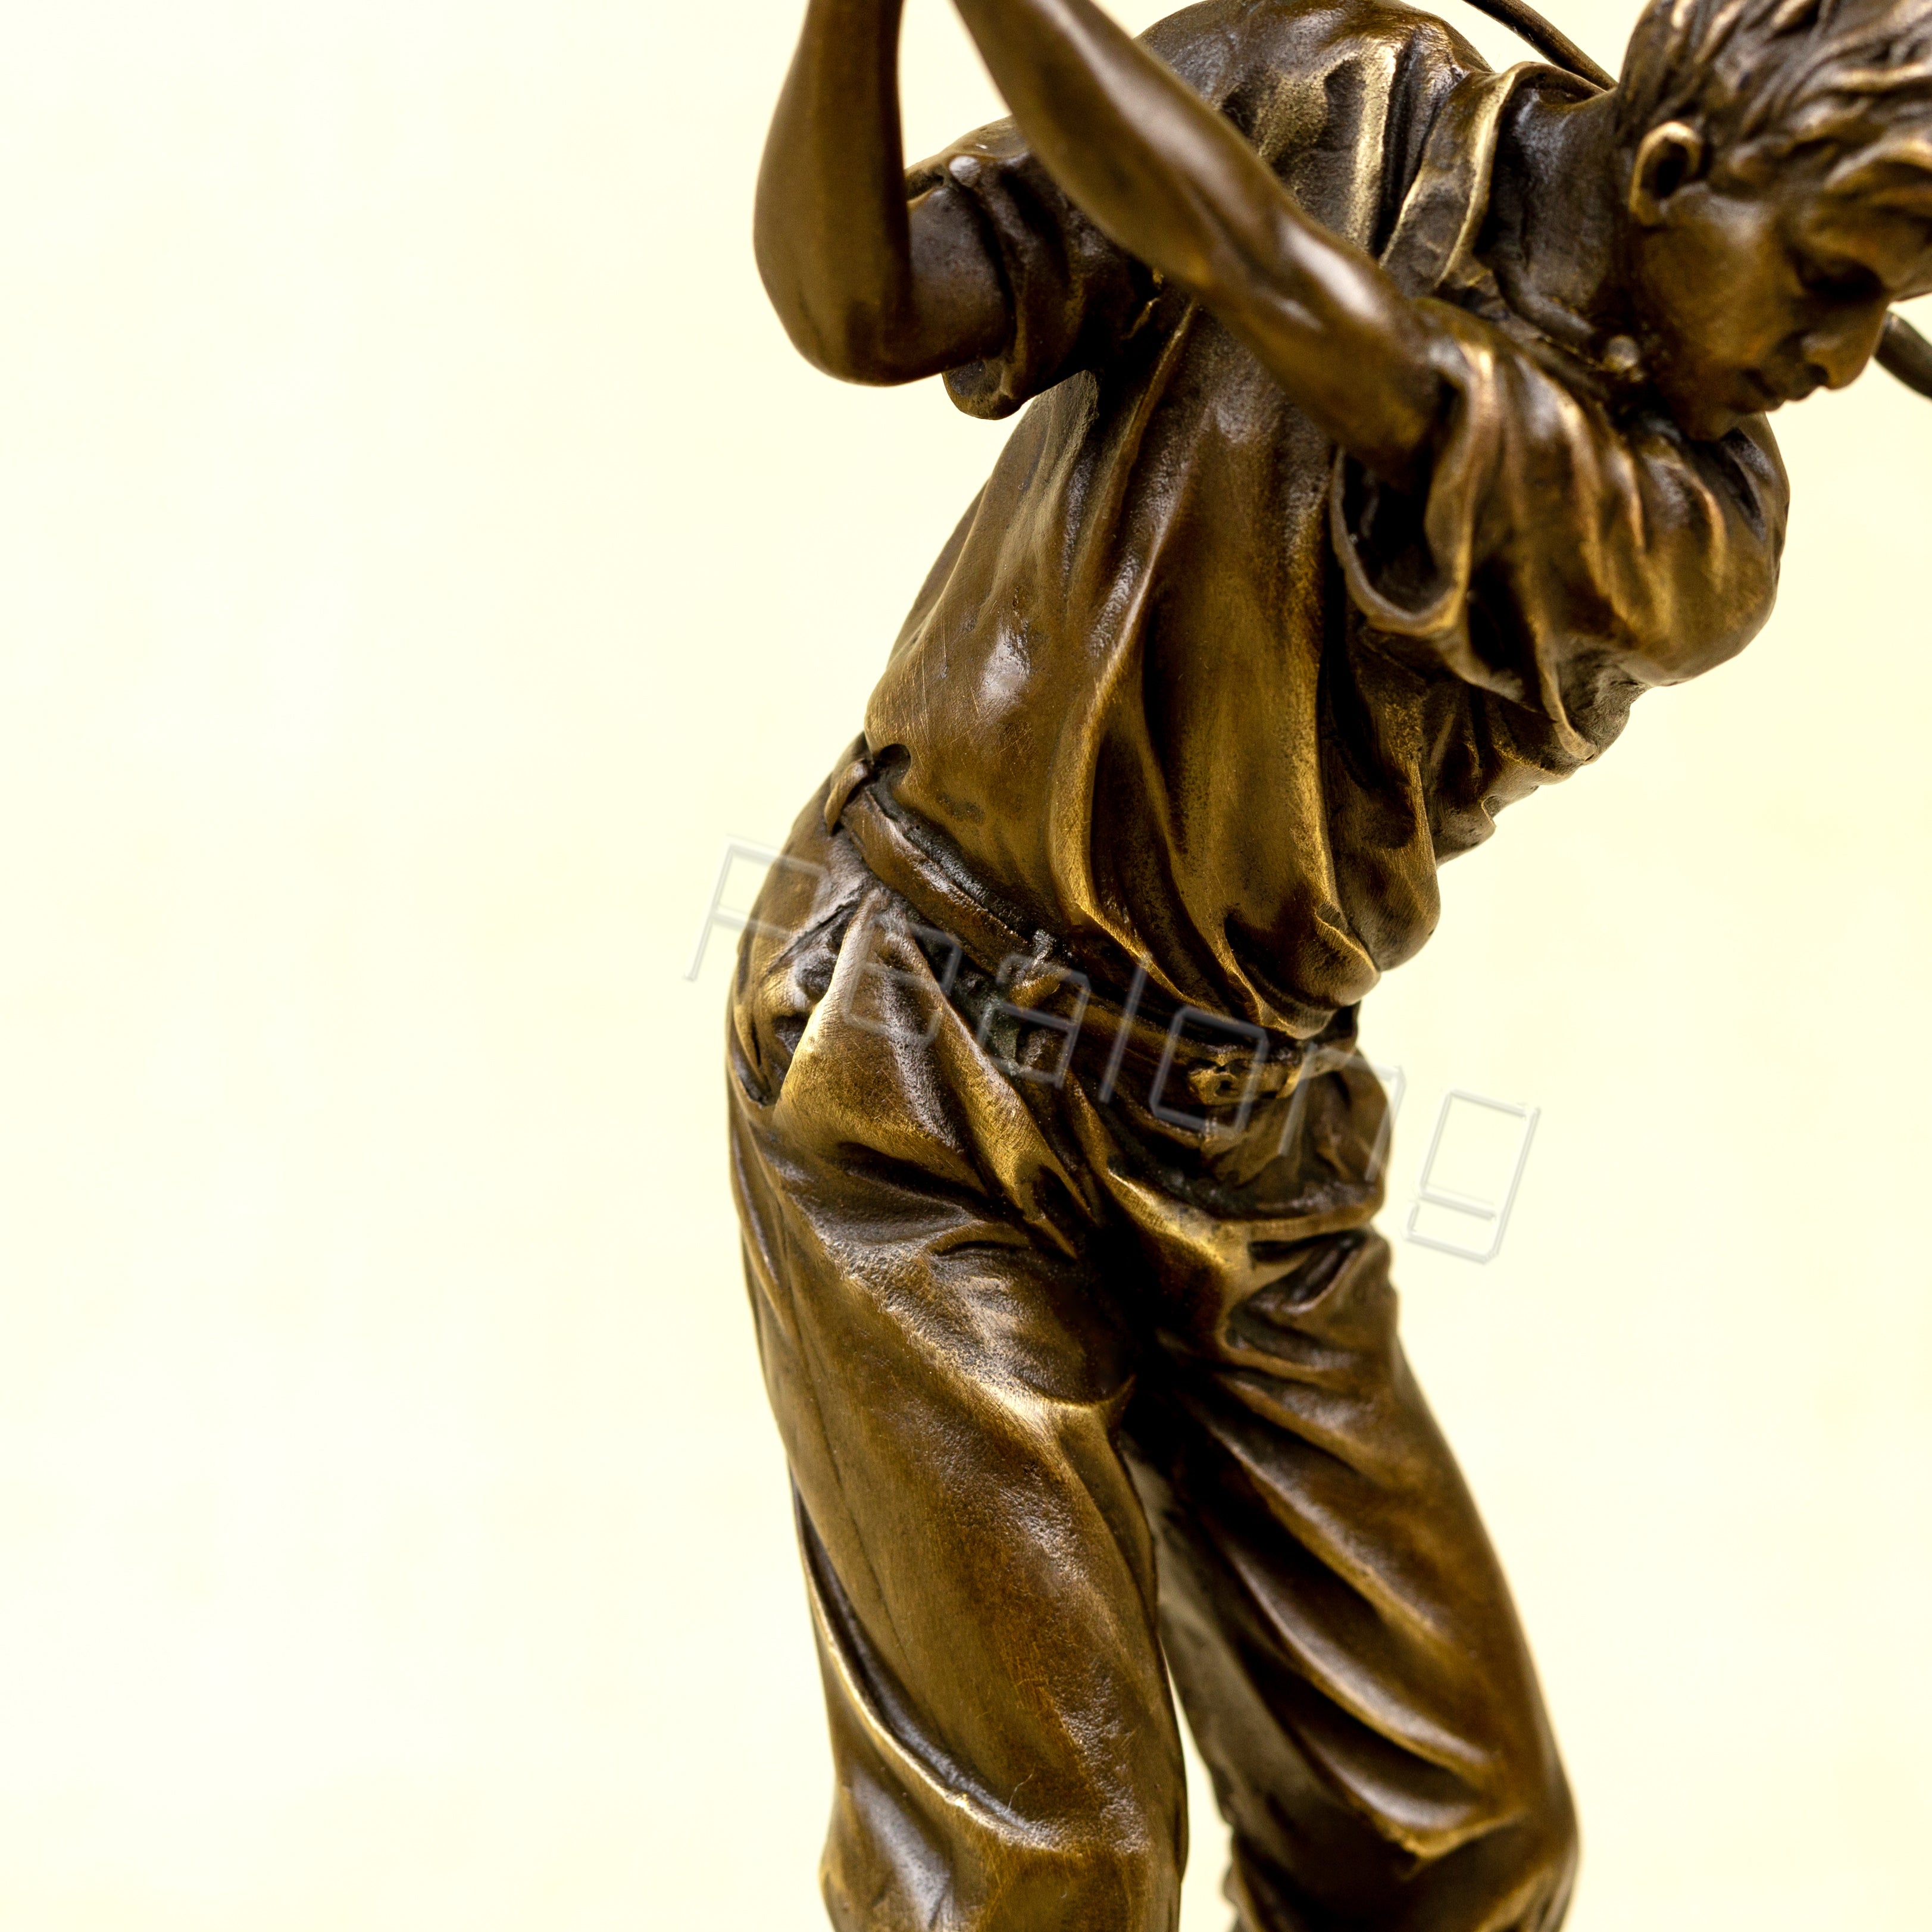 32cm Bronze Golf Man Statue Playing Golf Sculpture Bronze Golfer Art Figurine Bronze Casting Crafts Ornament For Home Decor Gift